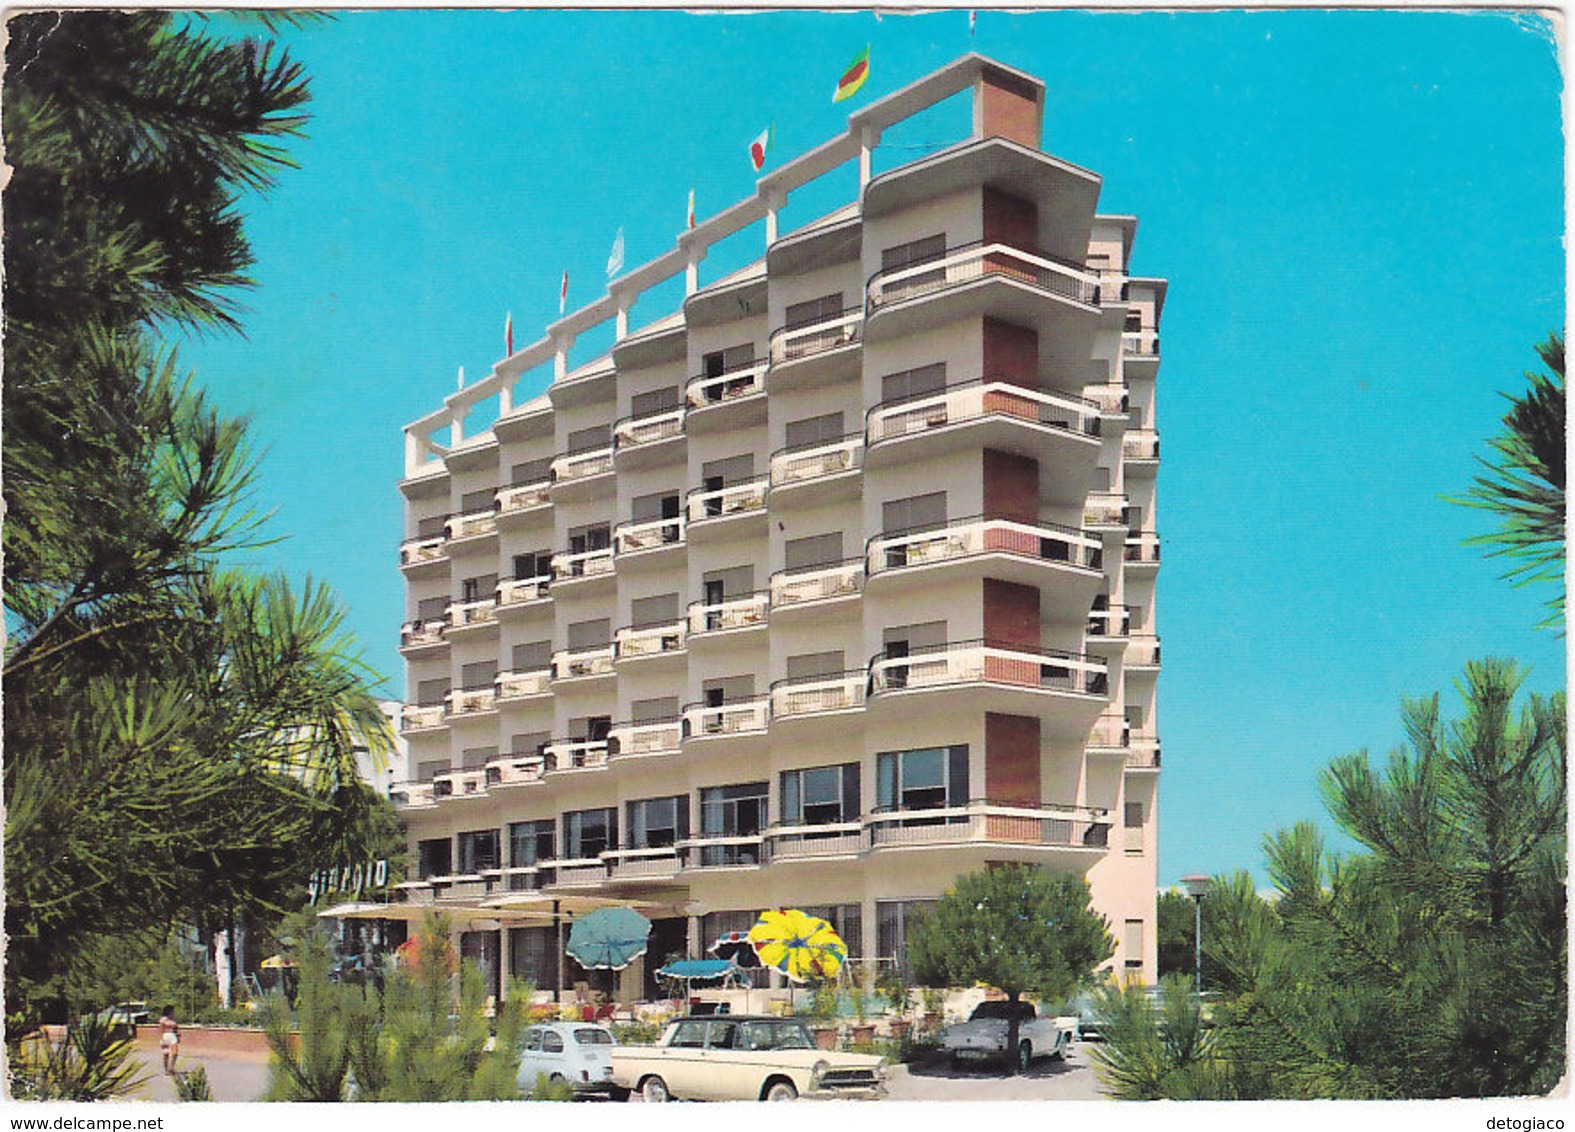 MILANO MARITTIMA - RAVENNA - HOTEL SAN GIORGIO - VIAGG. 1965 -78864- - Ravenna